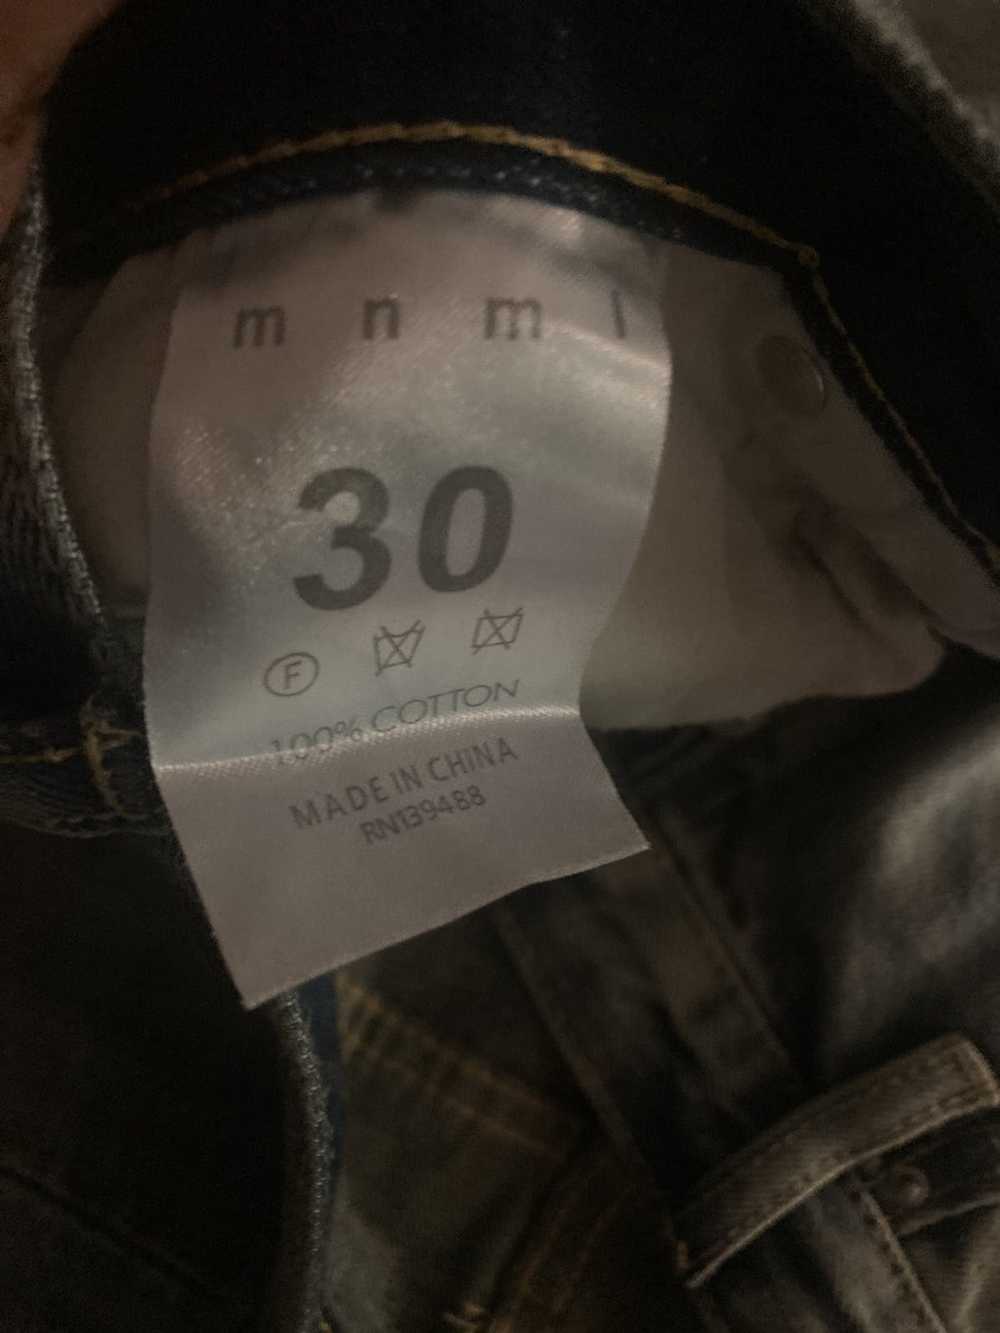 MNML Mnml m5 denim skinny jeans - image 4